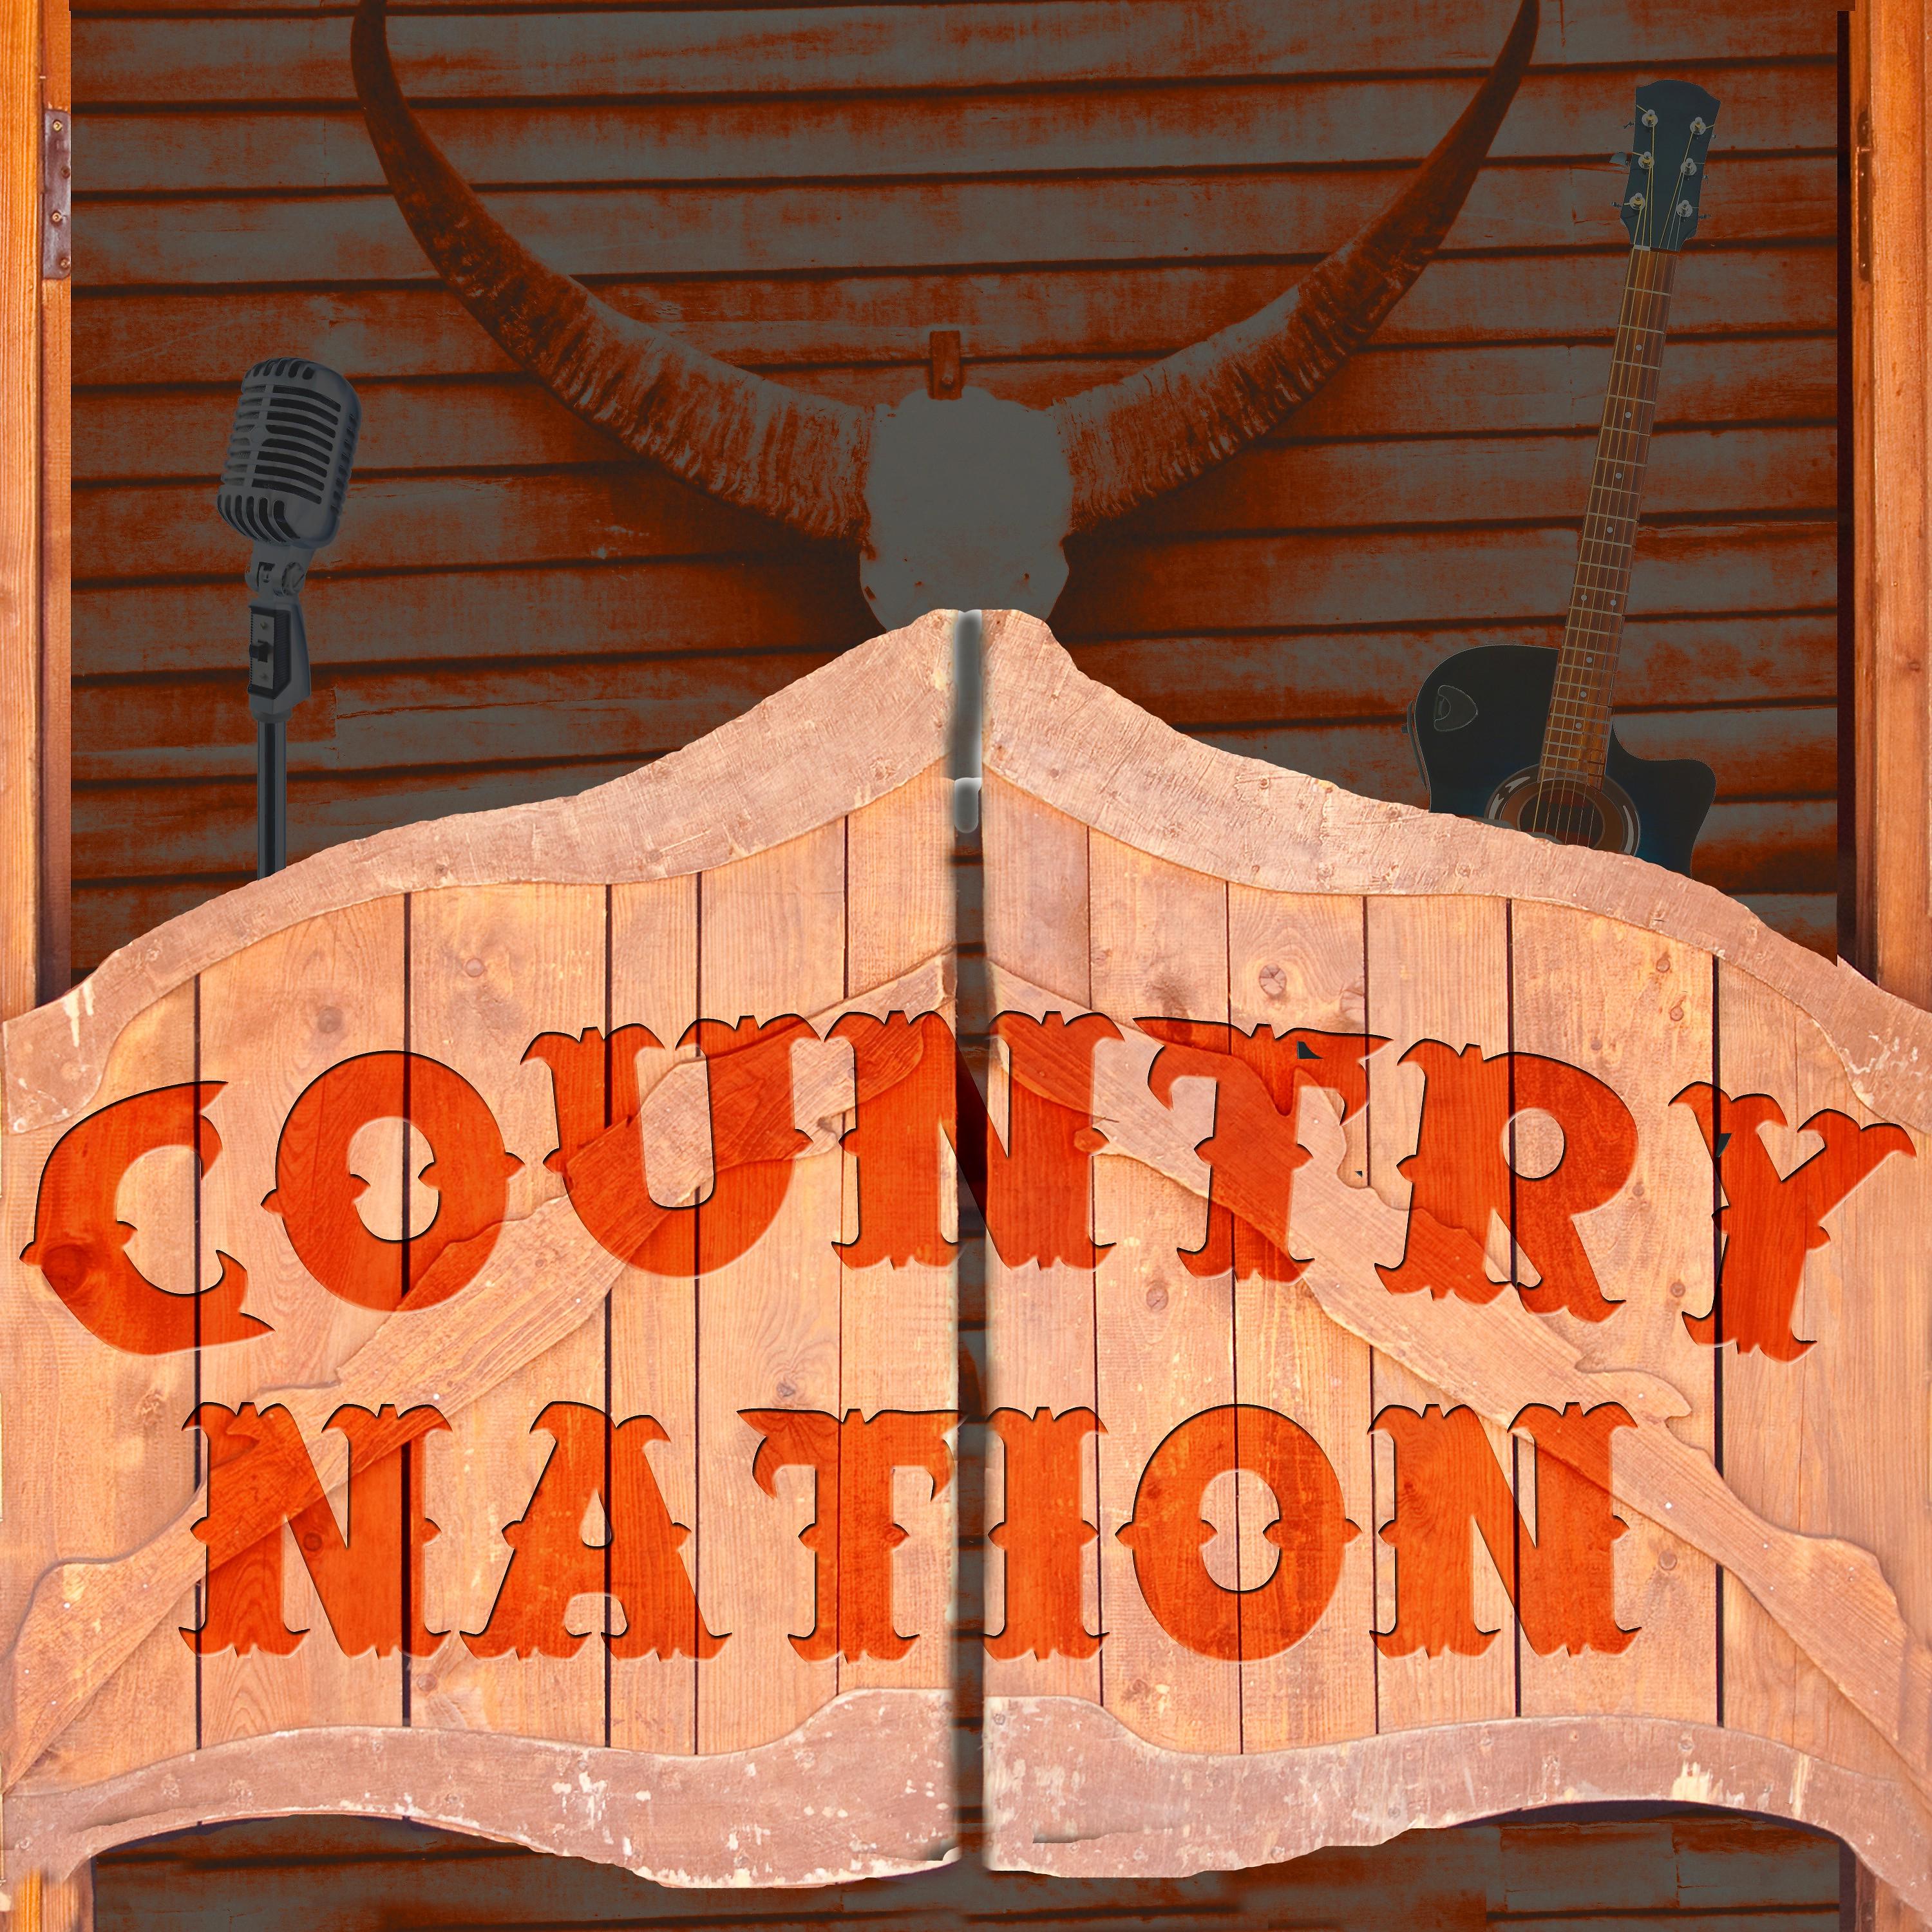 Постер альбома Country Nation